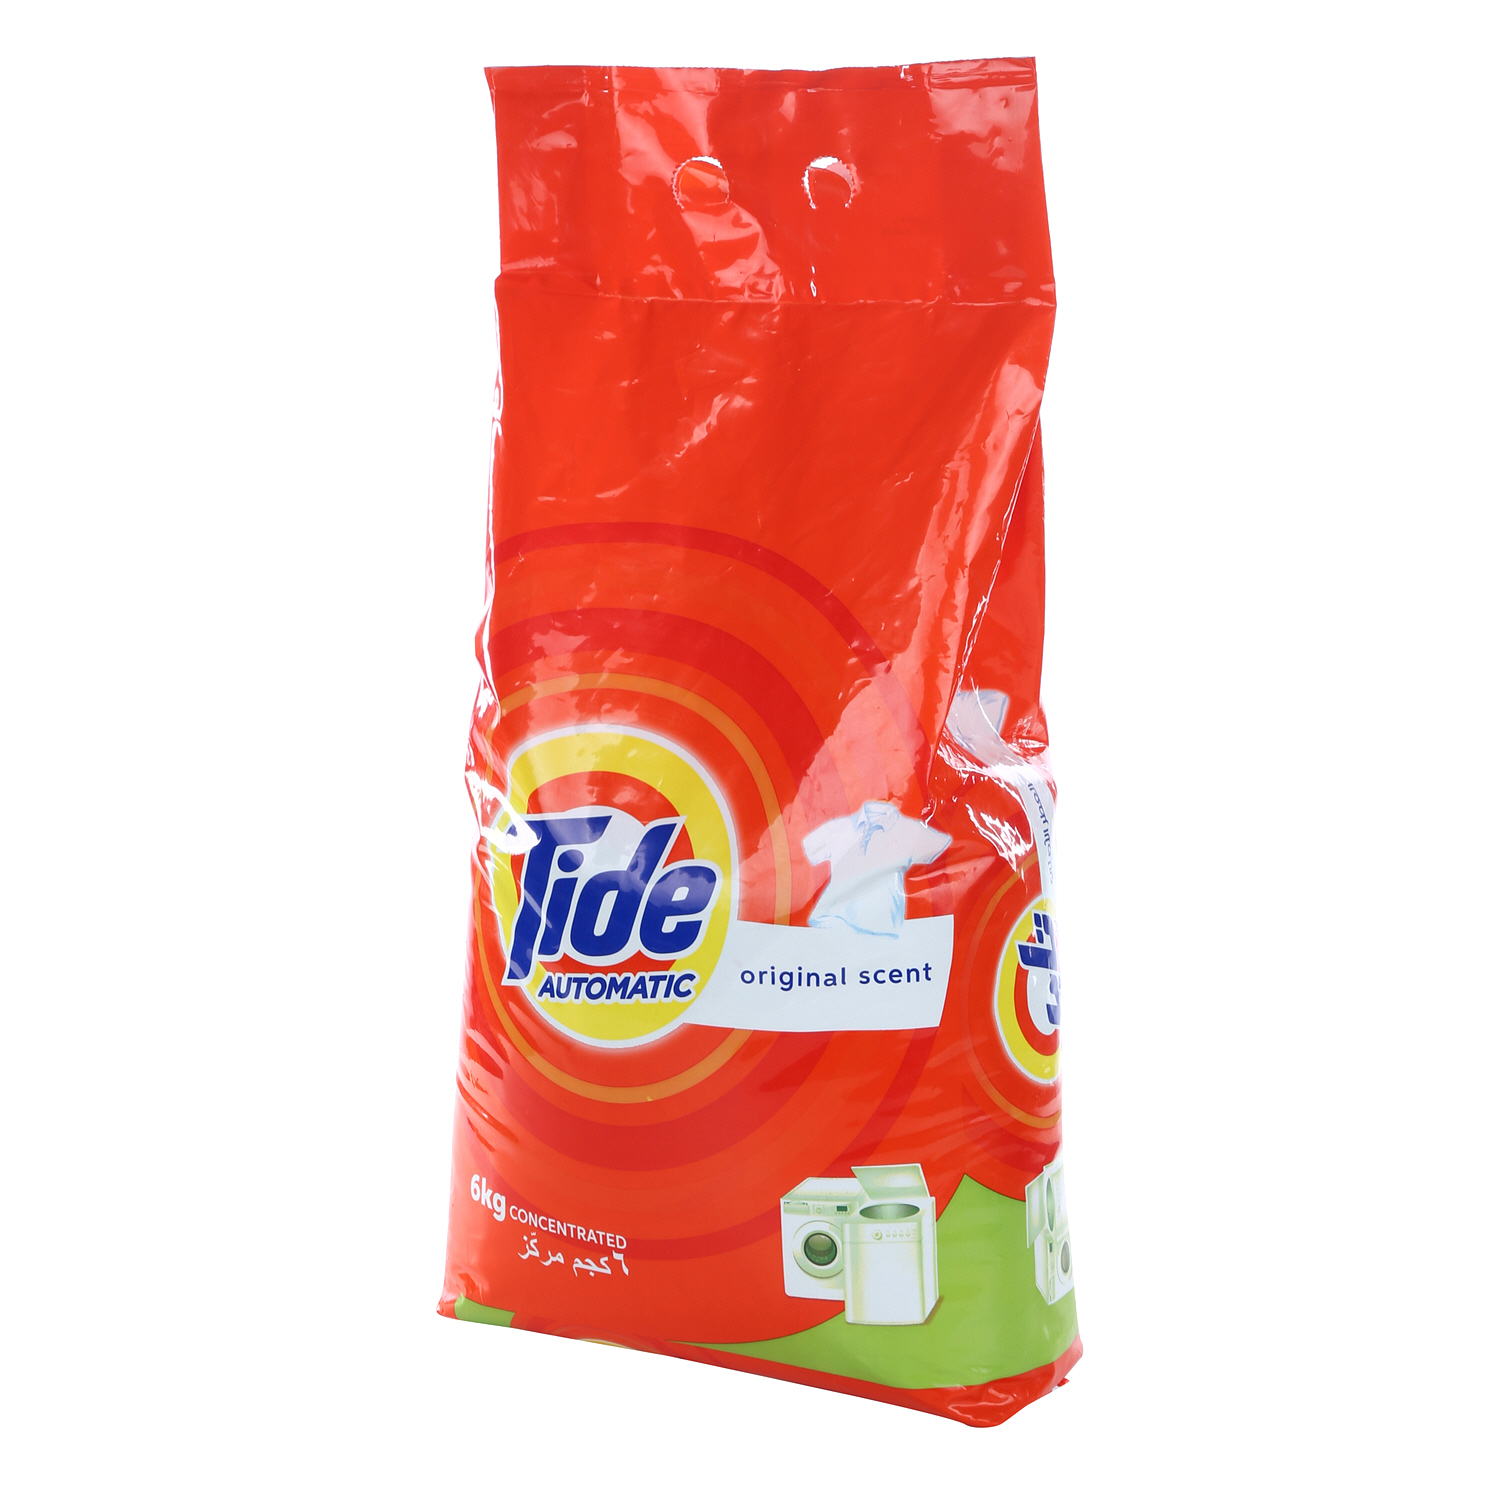 Tide Automatic Detergent Orignial 6 Kg